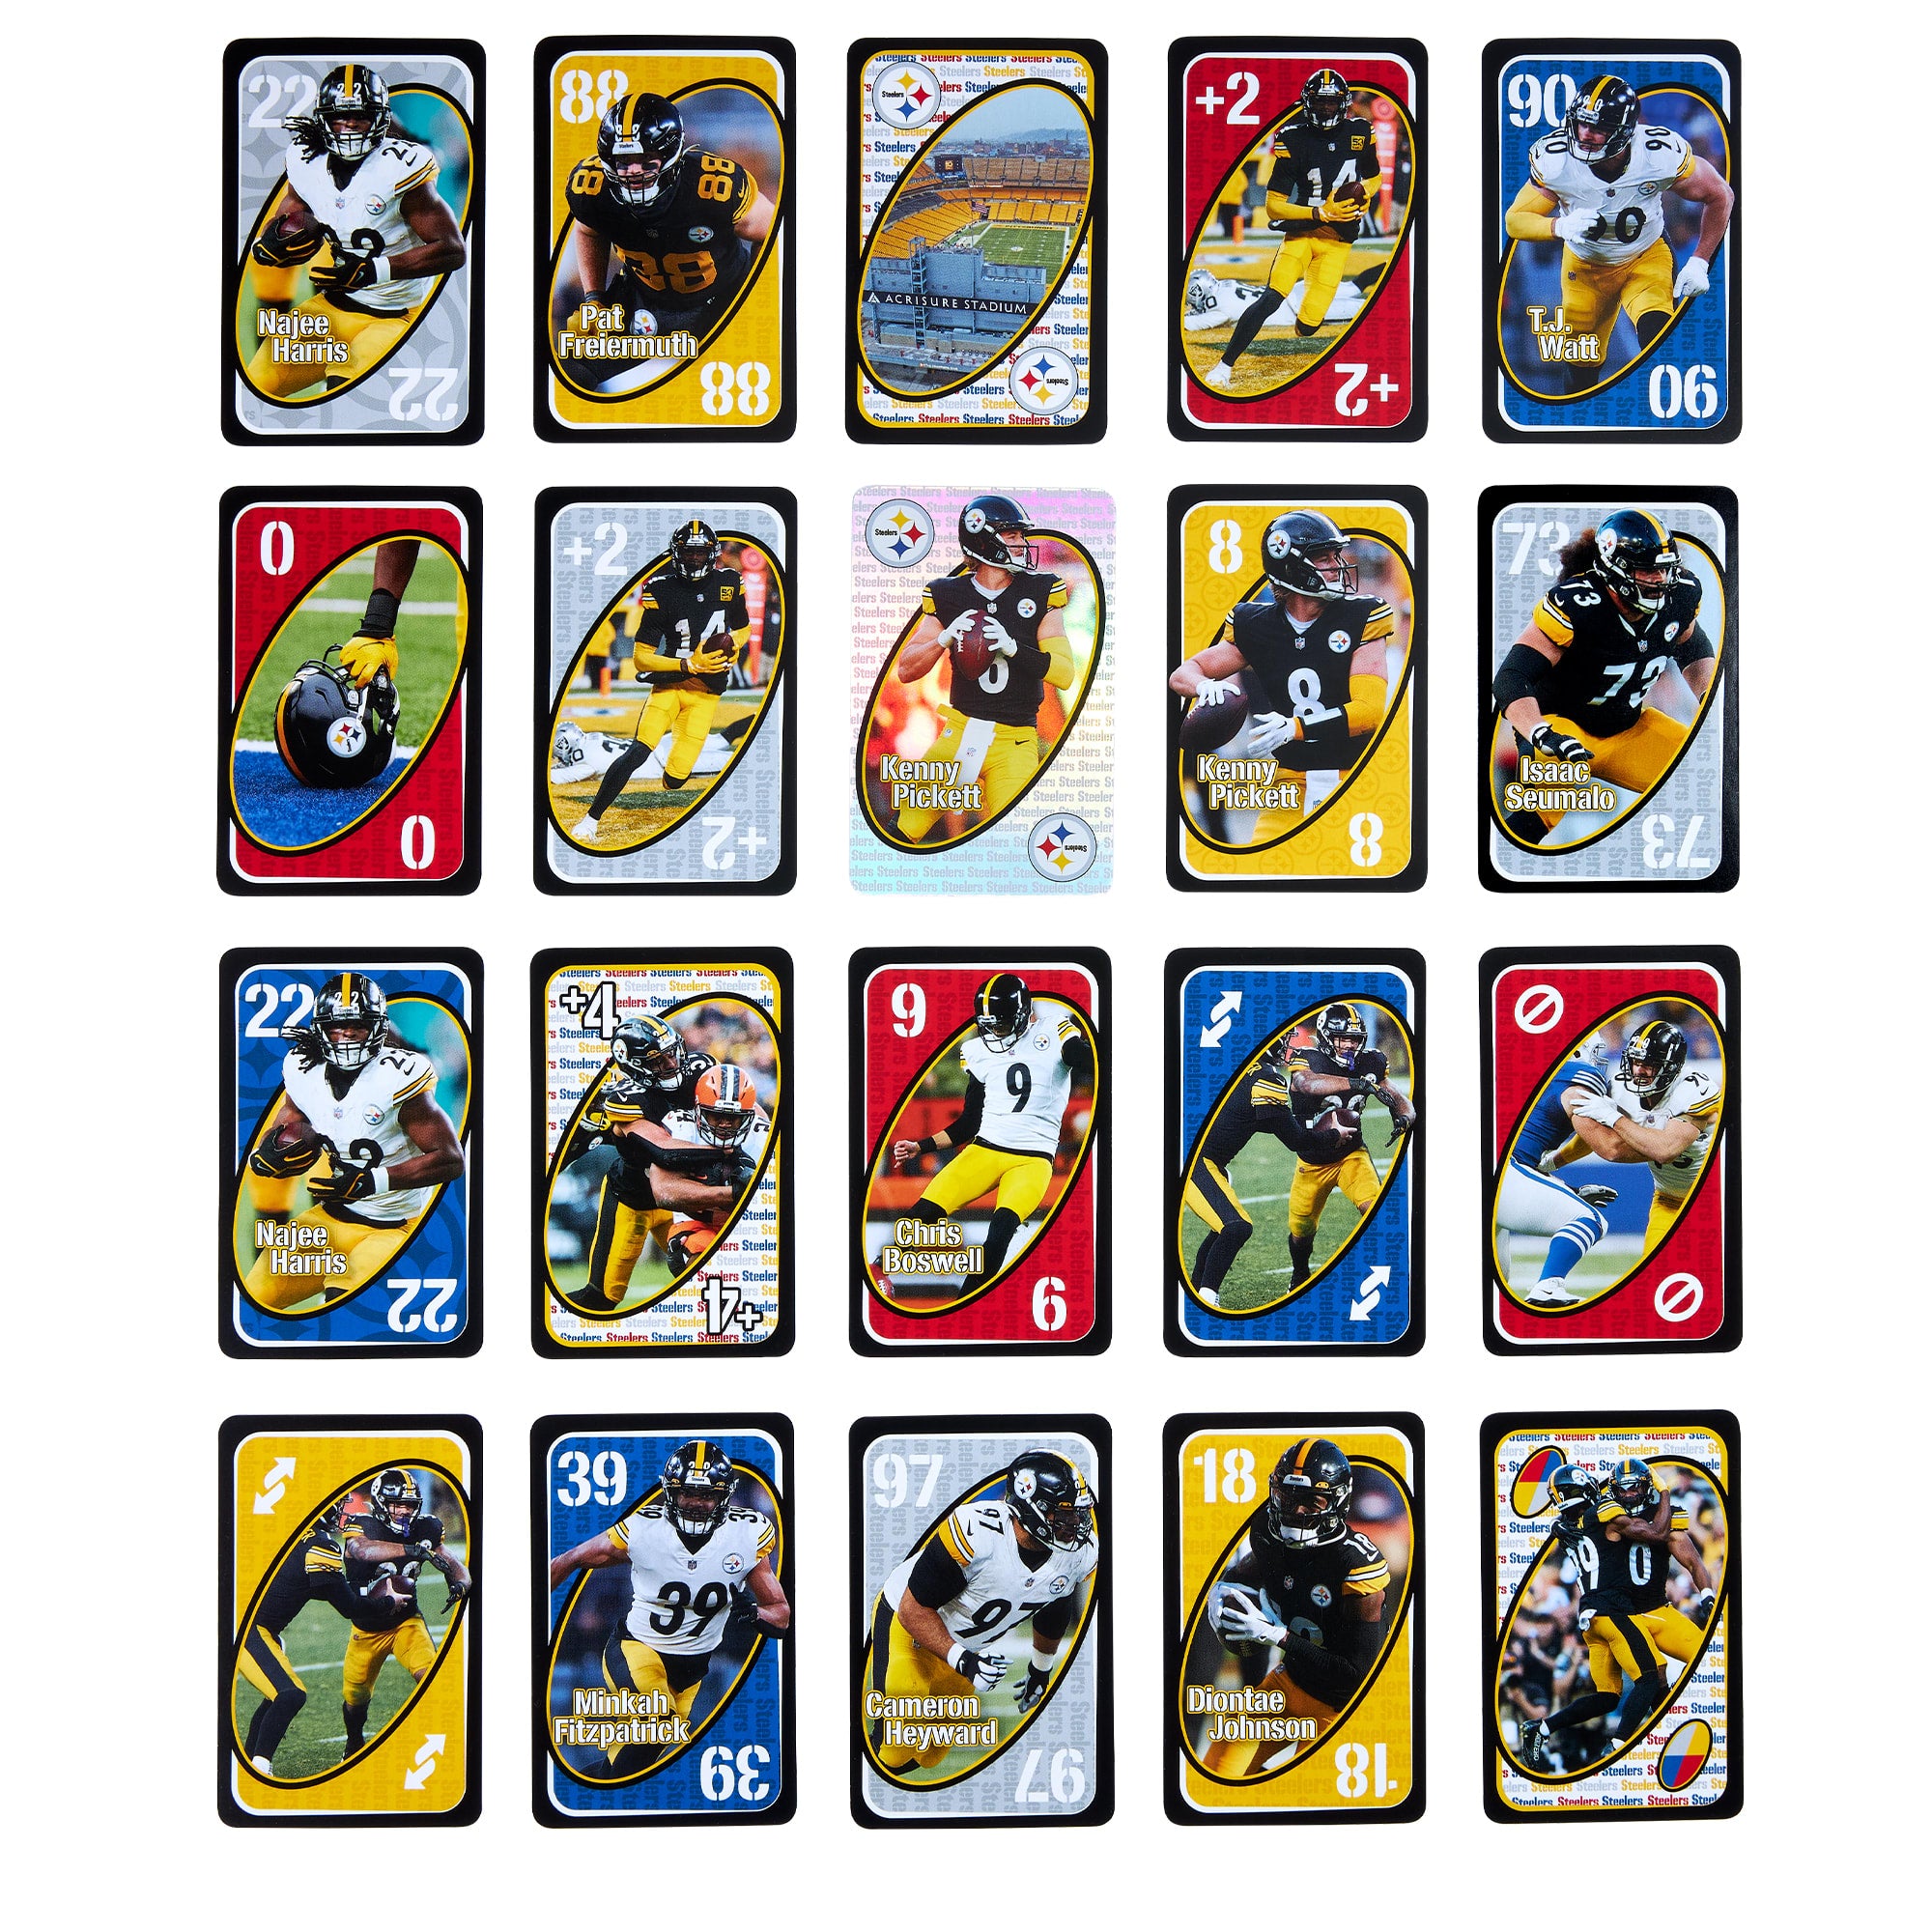 UNO Fandom NFL Pittsburgh Steelers Game Deck